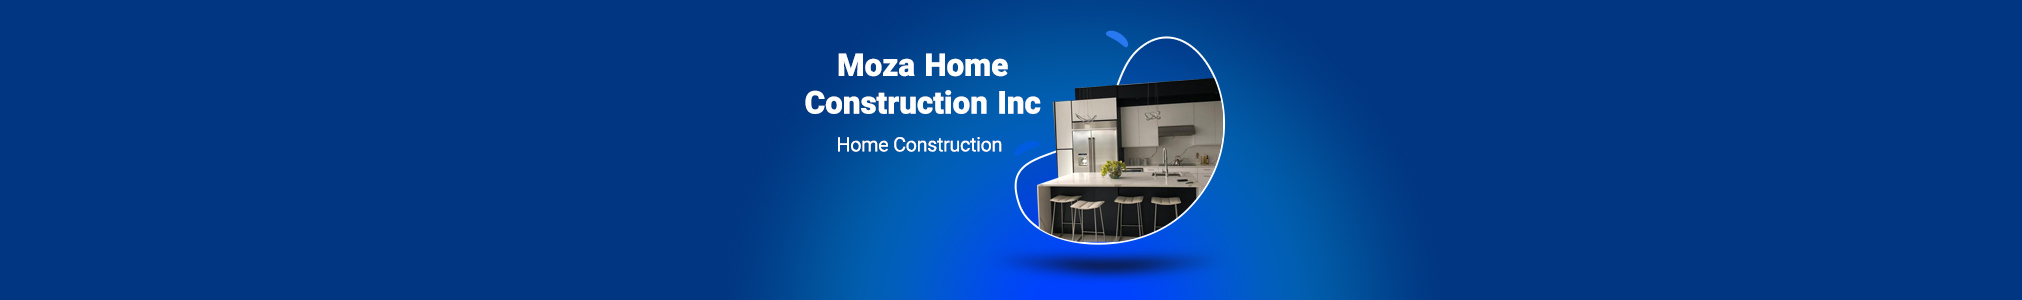 Moza Home Construction Inc